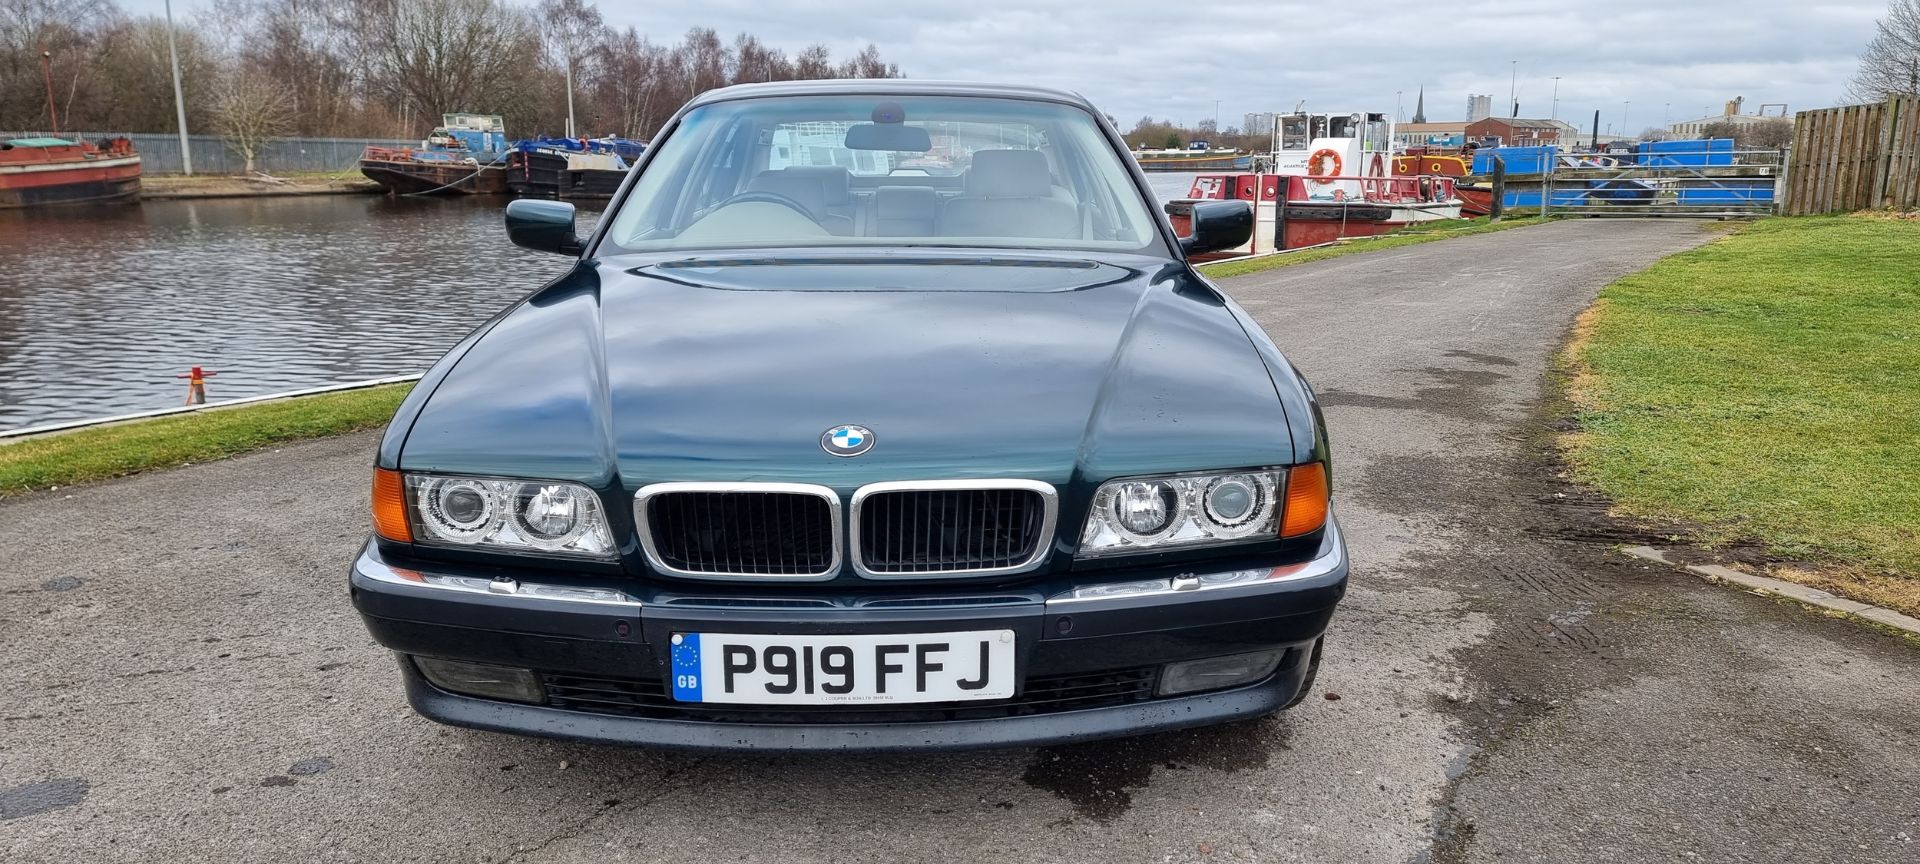 1996 BMW 740iL, 4398cc. Registration number P919 FFJ. Chassis number WBAGJ82060DB29182. Engine - Image 3 of 30